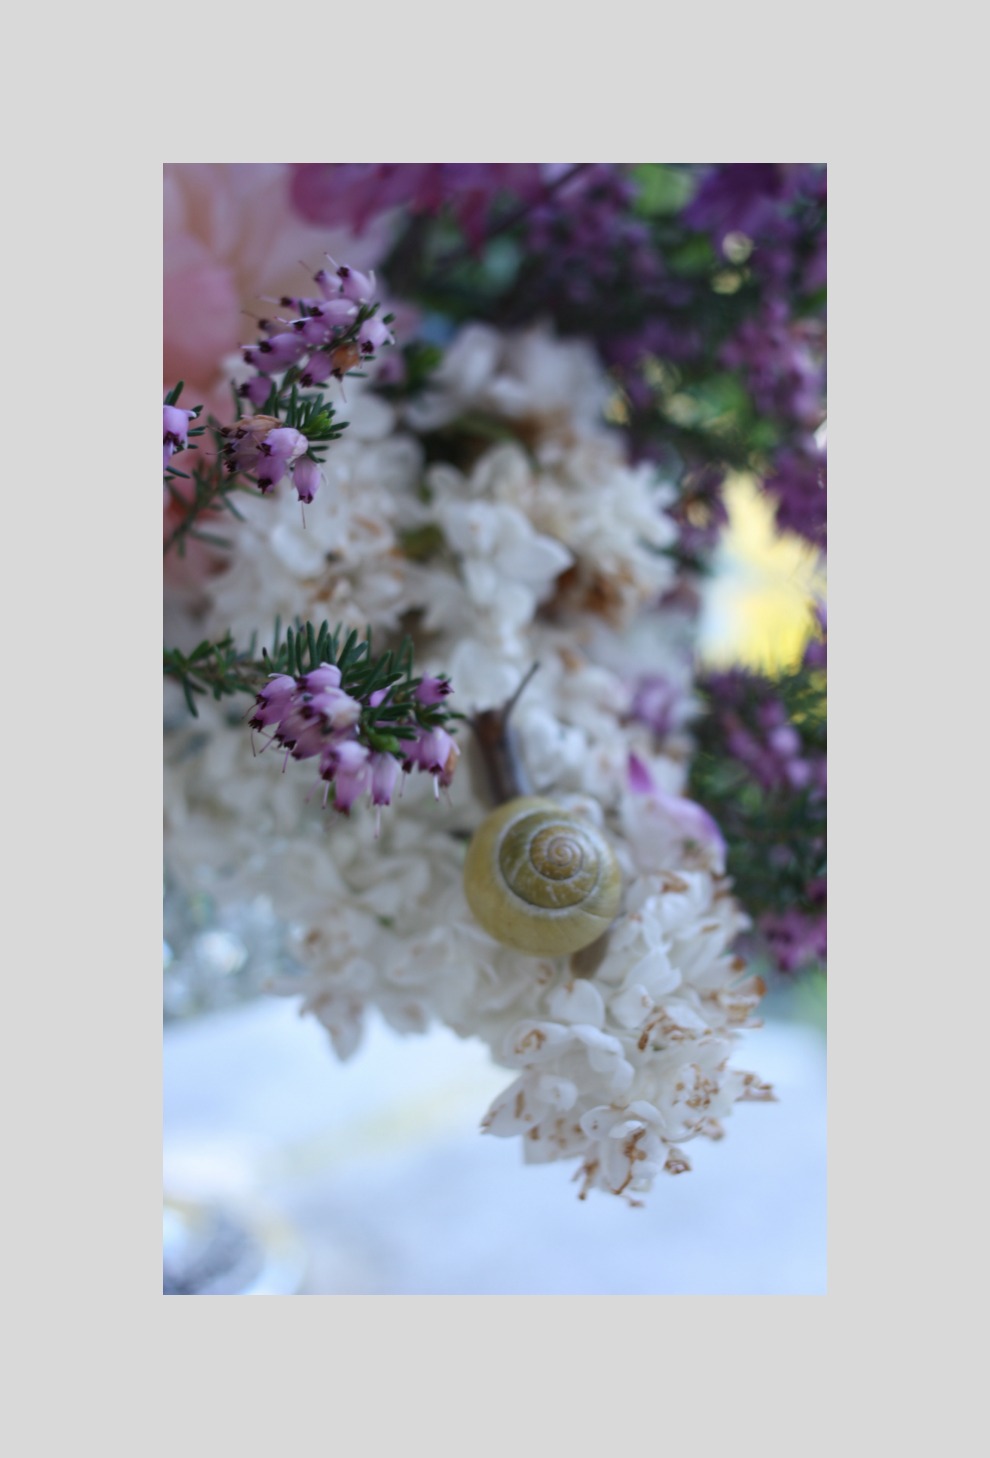 snail on lilac